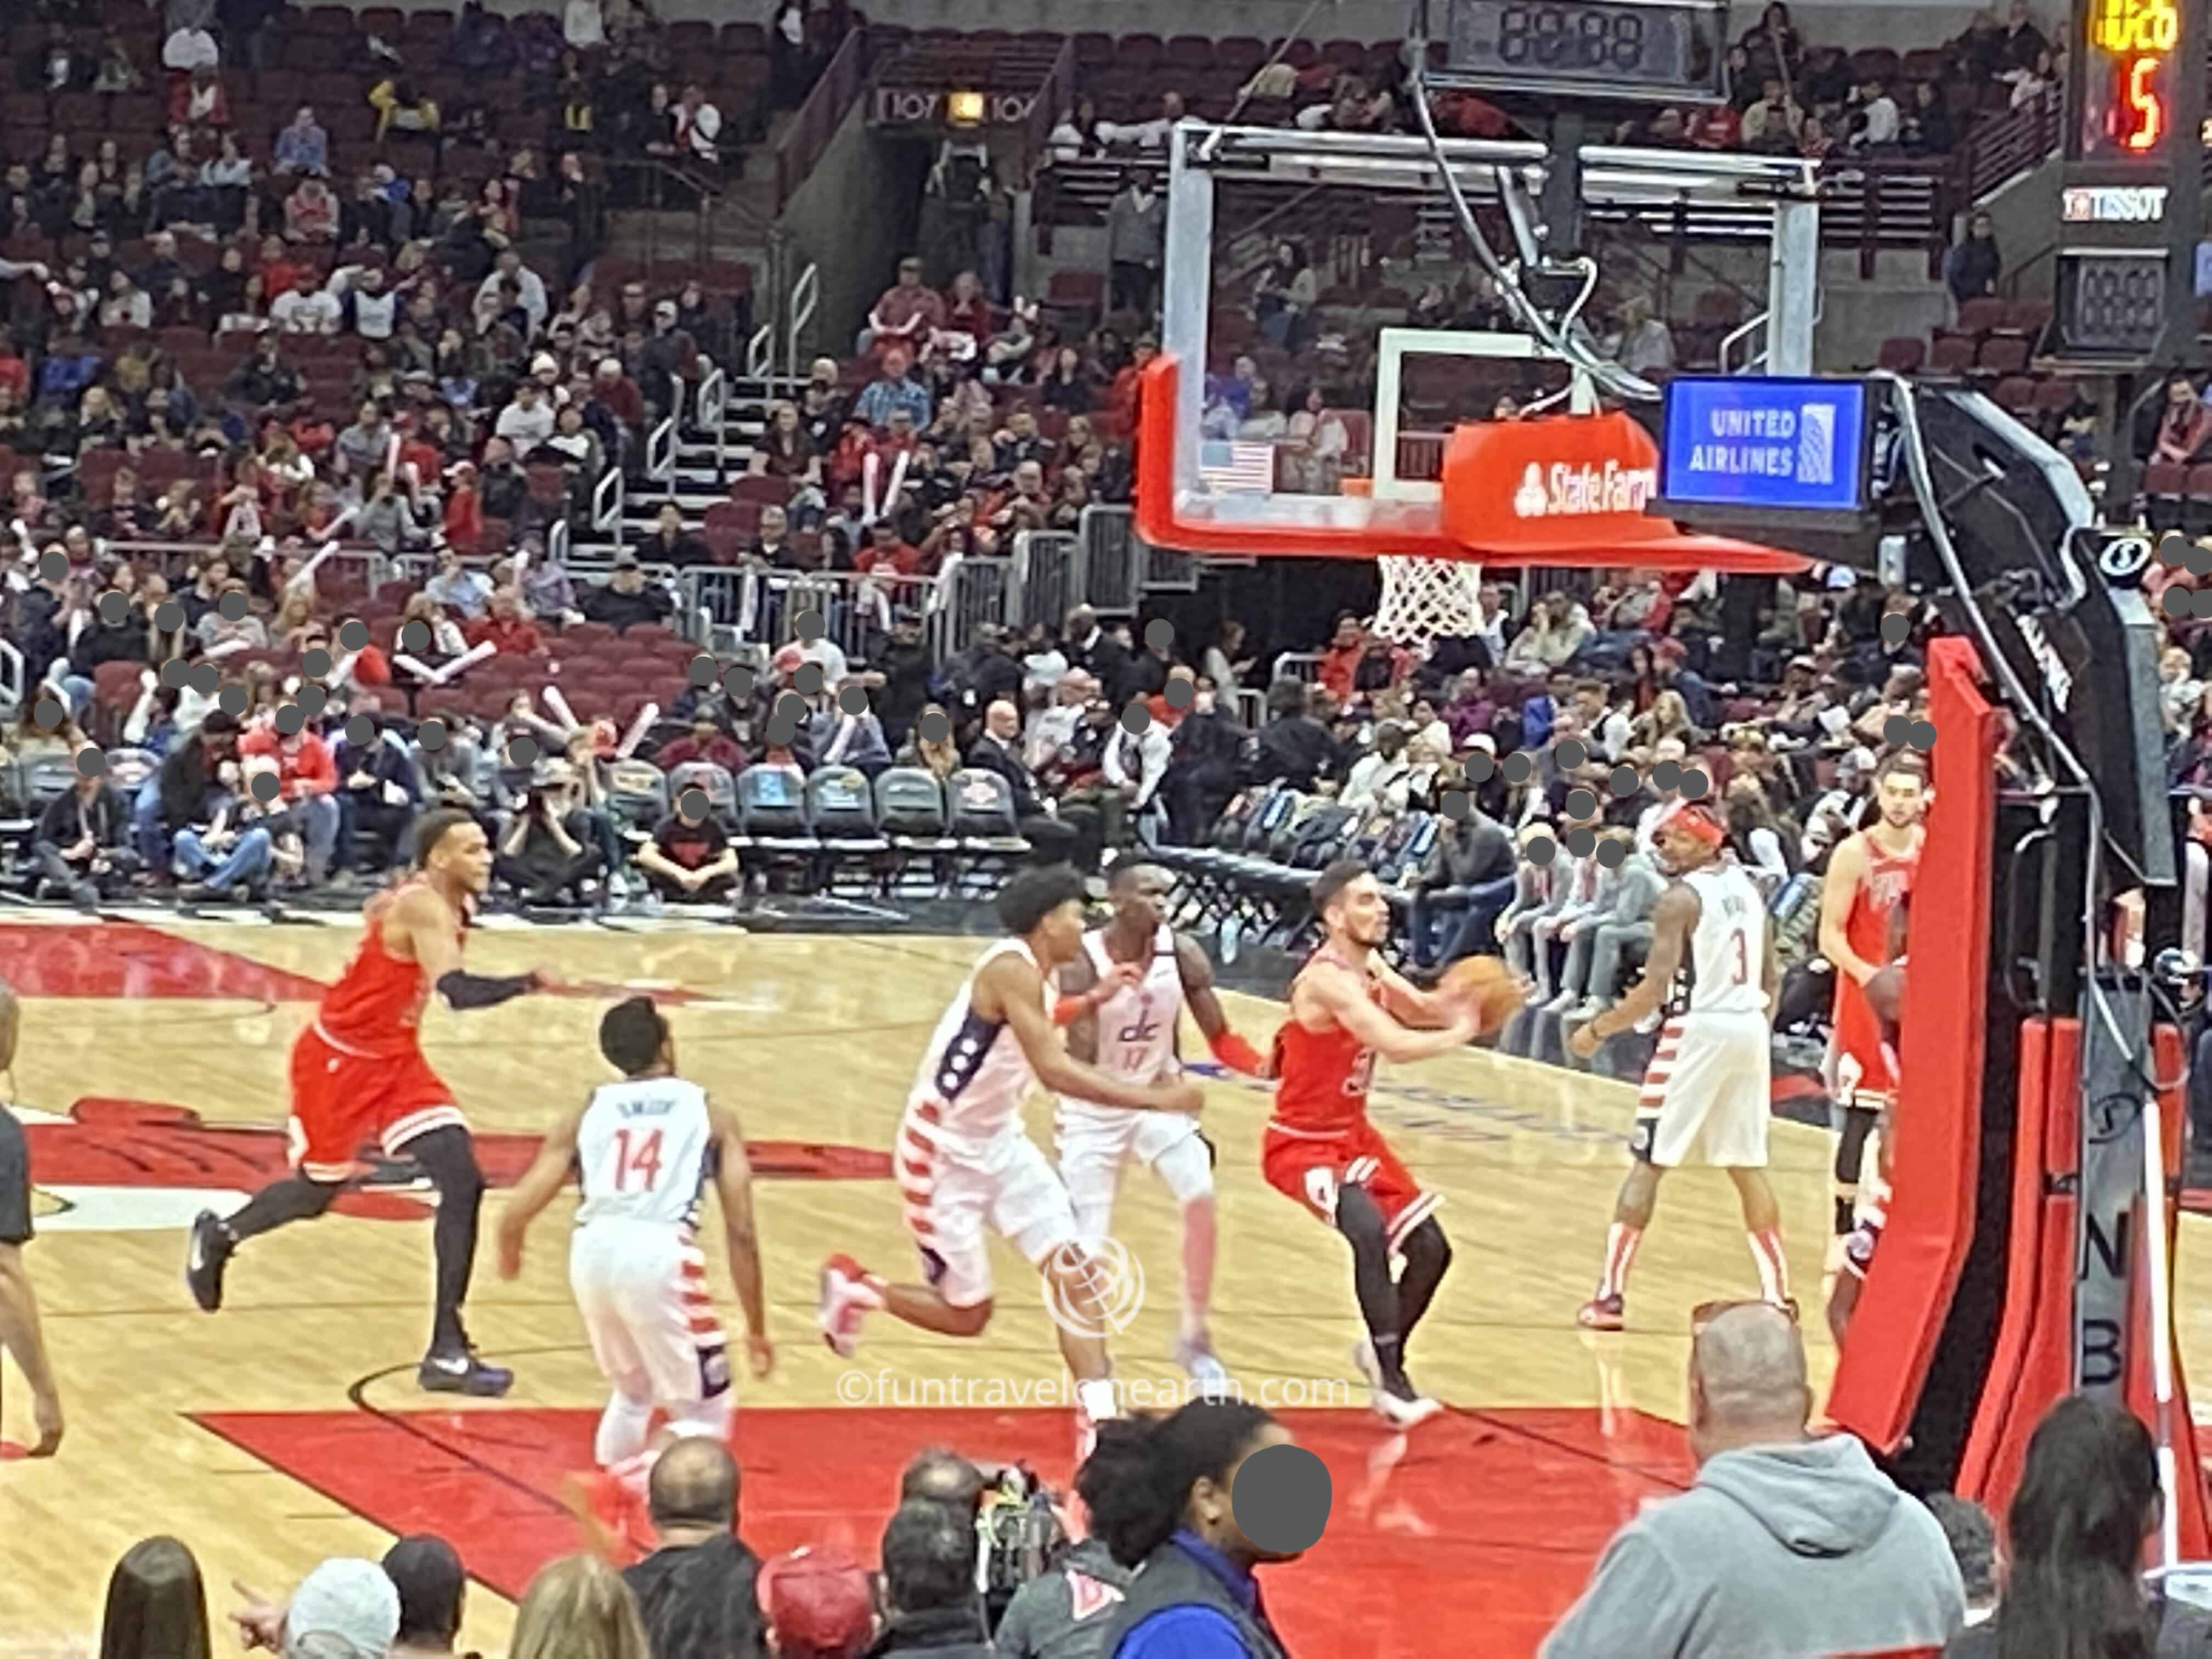 Chicago Bulls vs. Washington Wizards, United Center, Chicago, IL